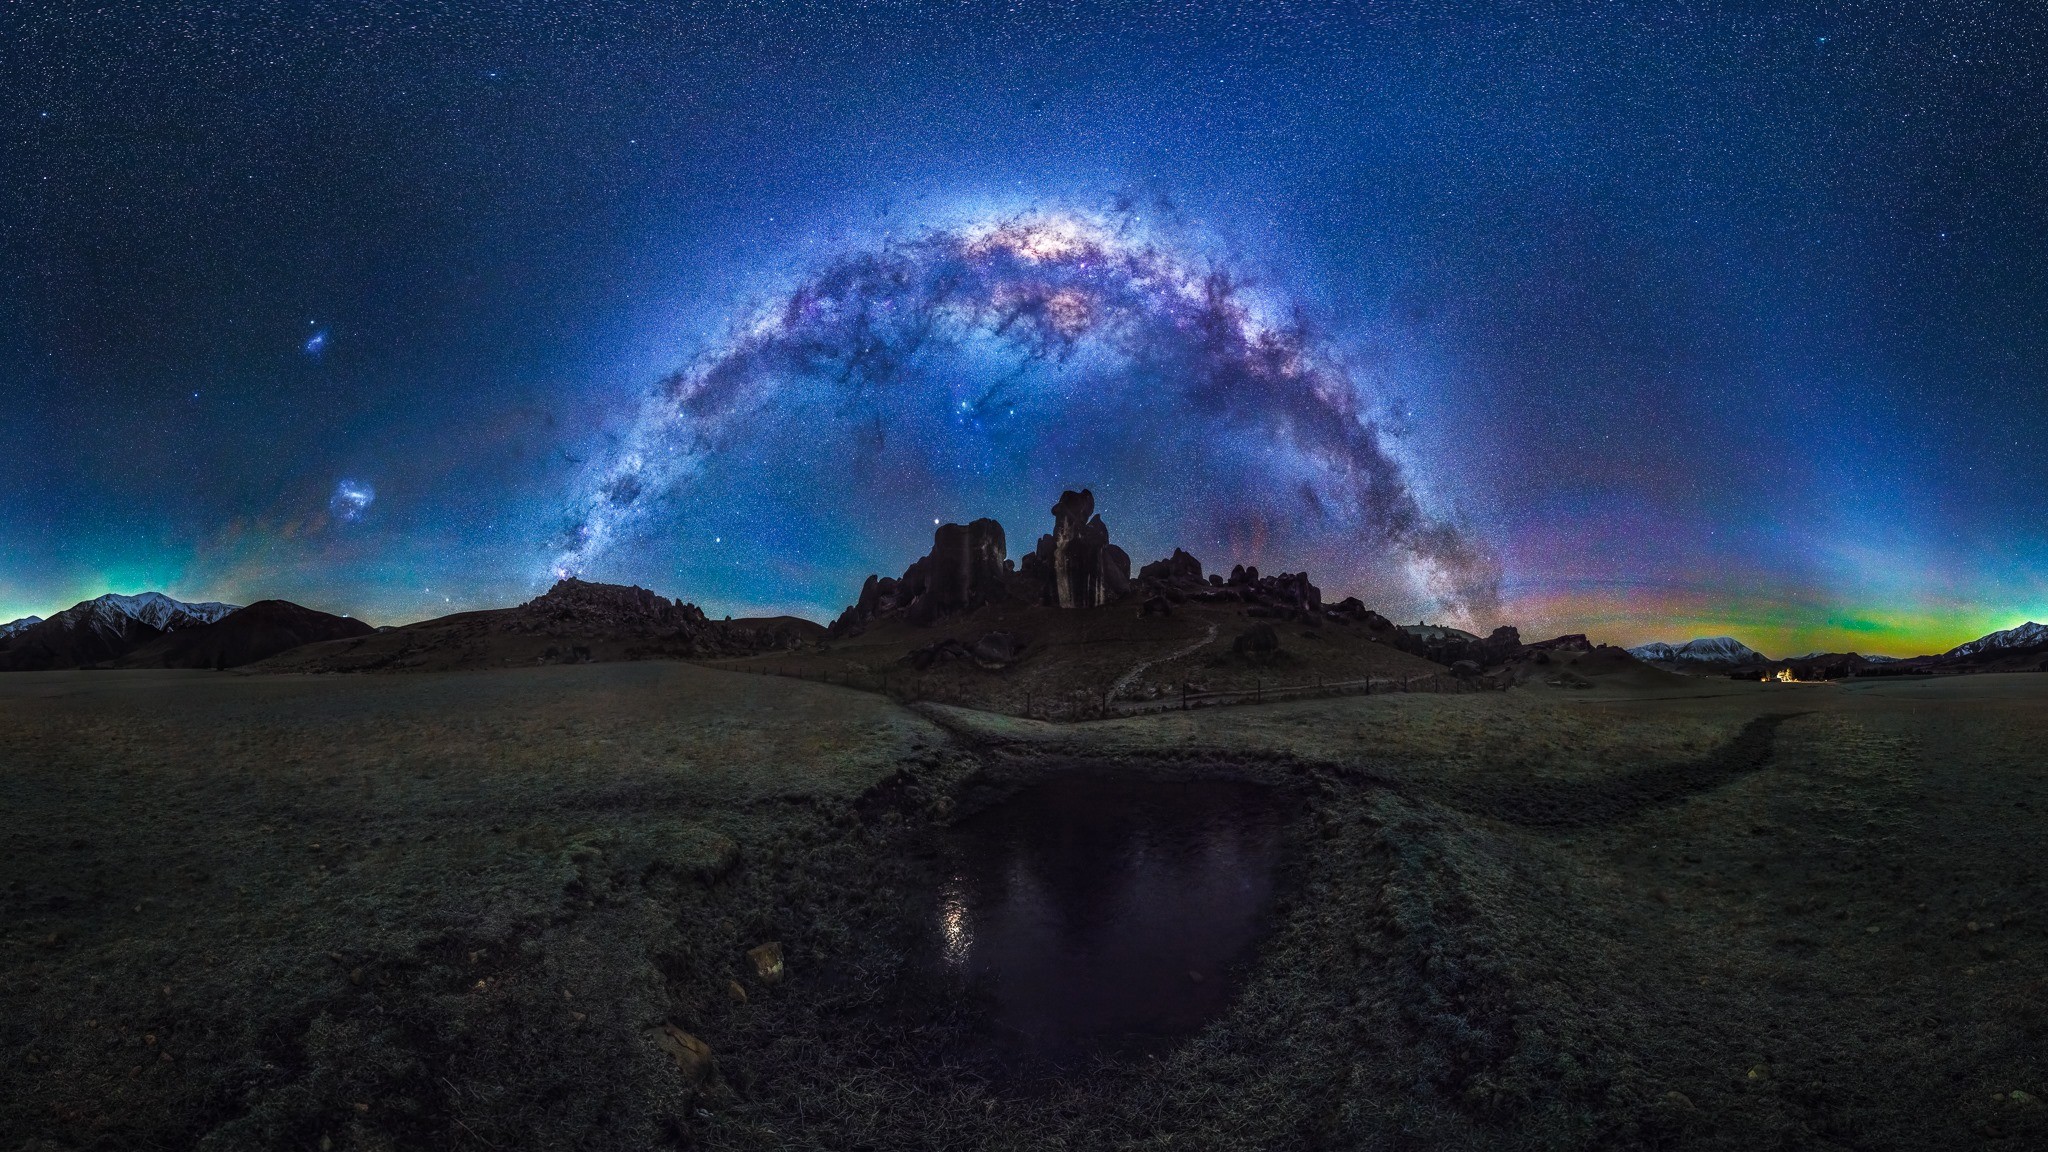 General 2048x1152 New Zealand atmosphere Milky Way night sky night sky panorama long exposure landscape nature stars